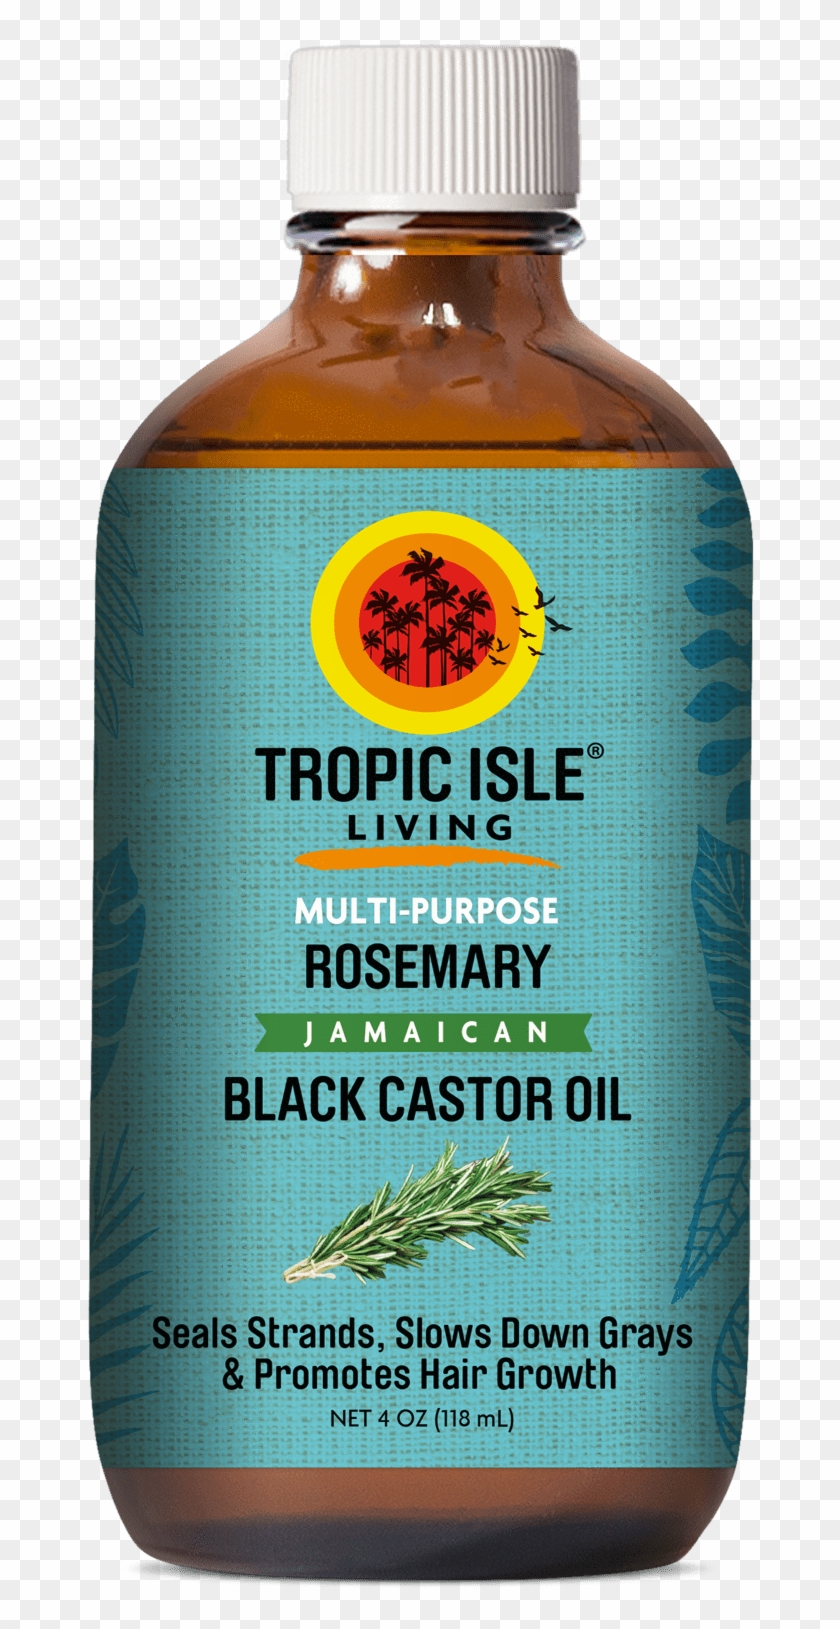 Rosemary Jamaican Black Castor Oil Clipart #912673